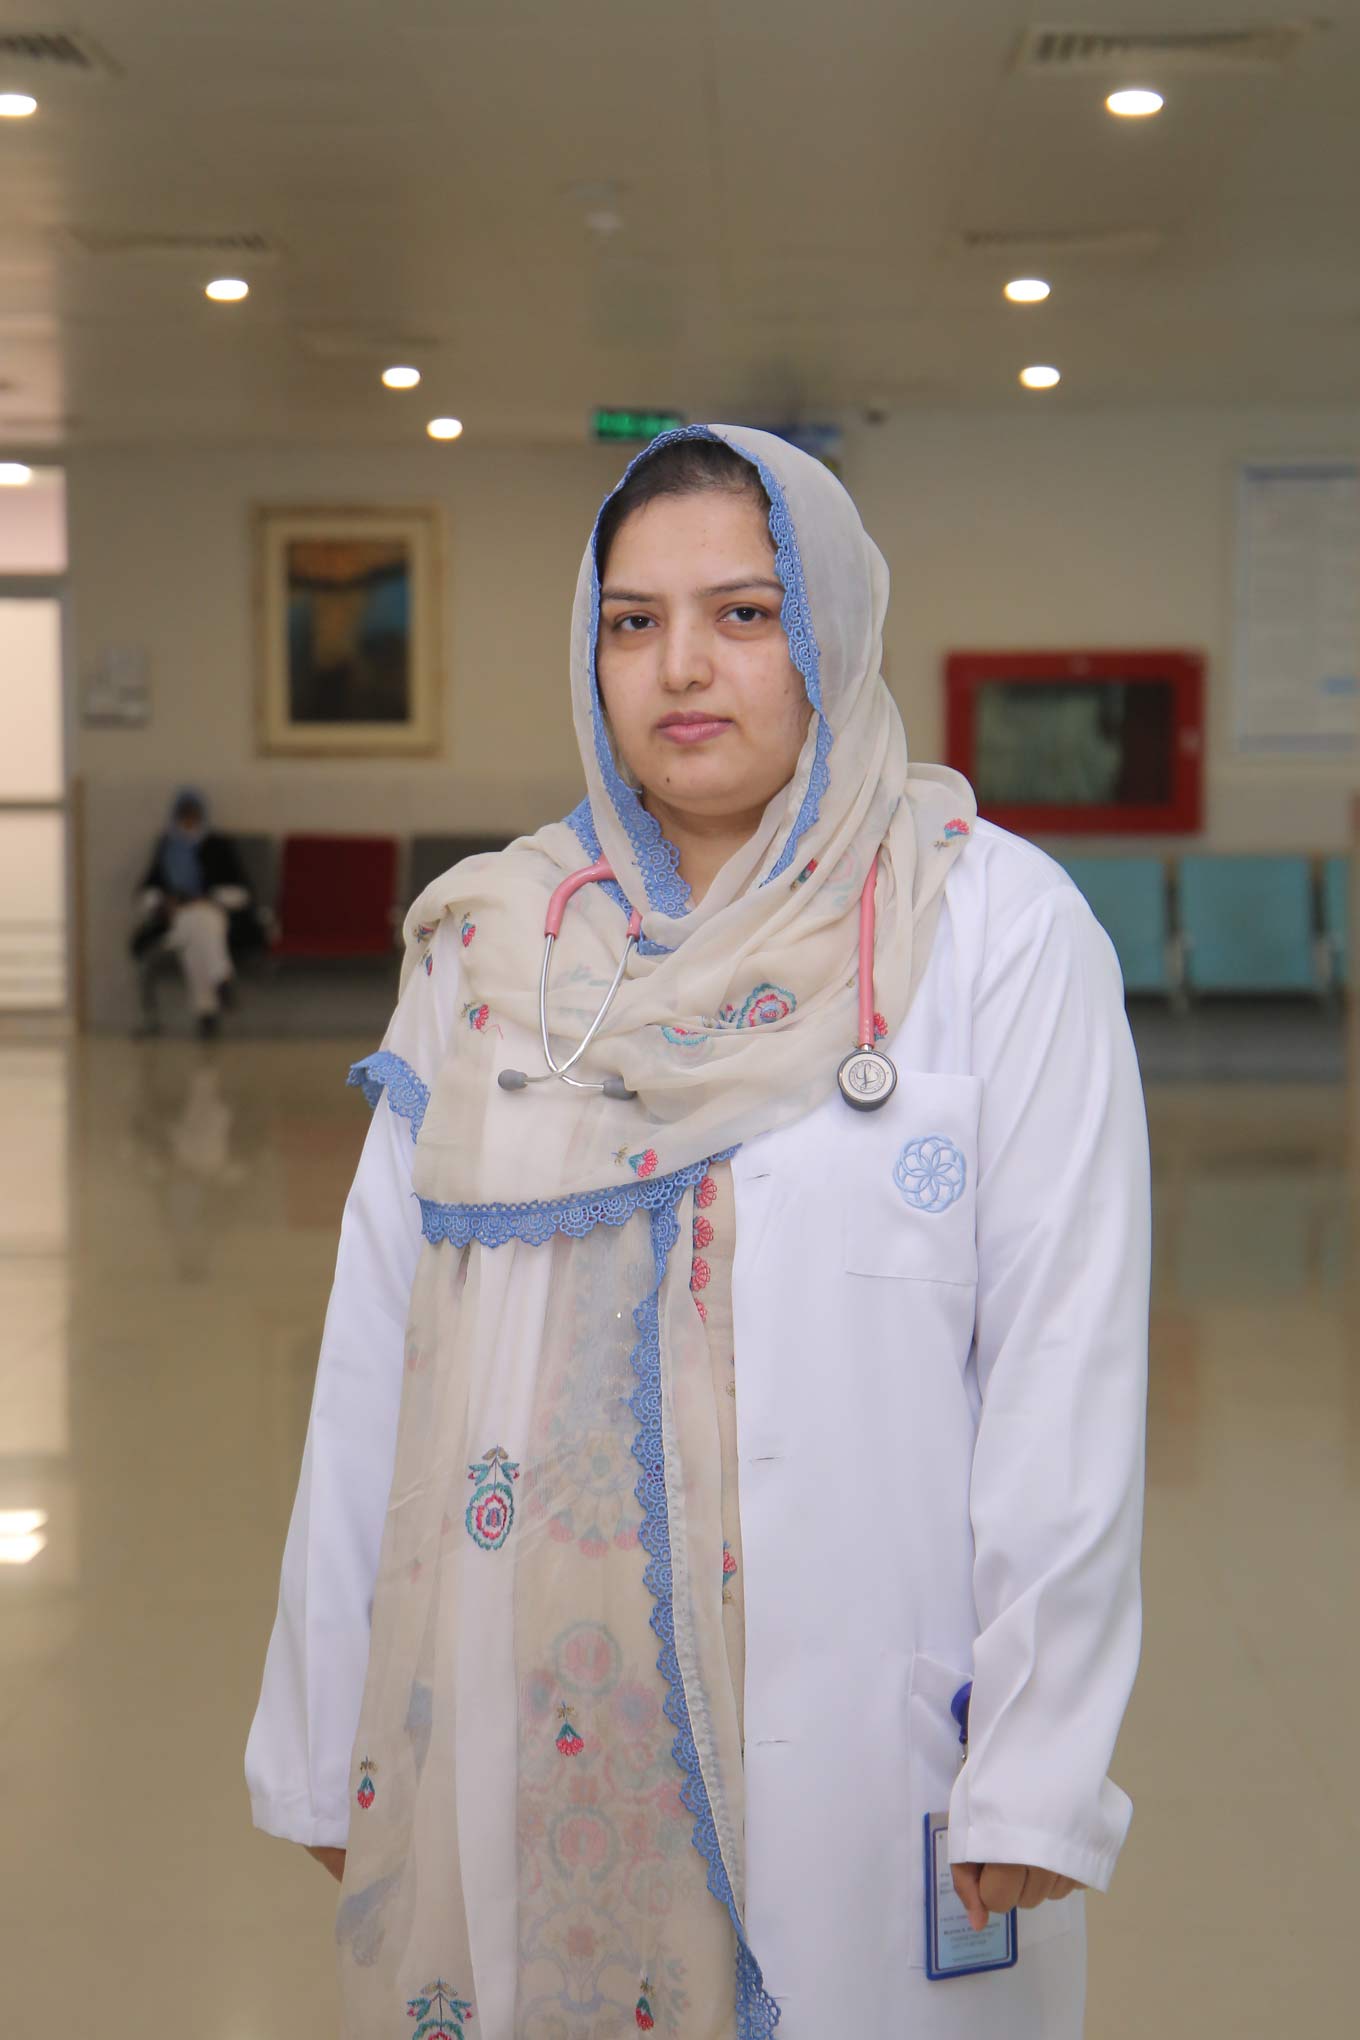 Dr. Sana Qaiser